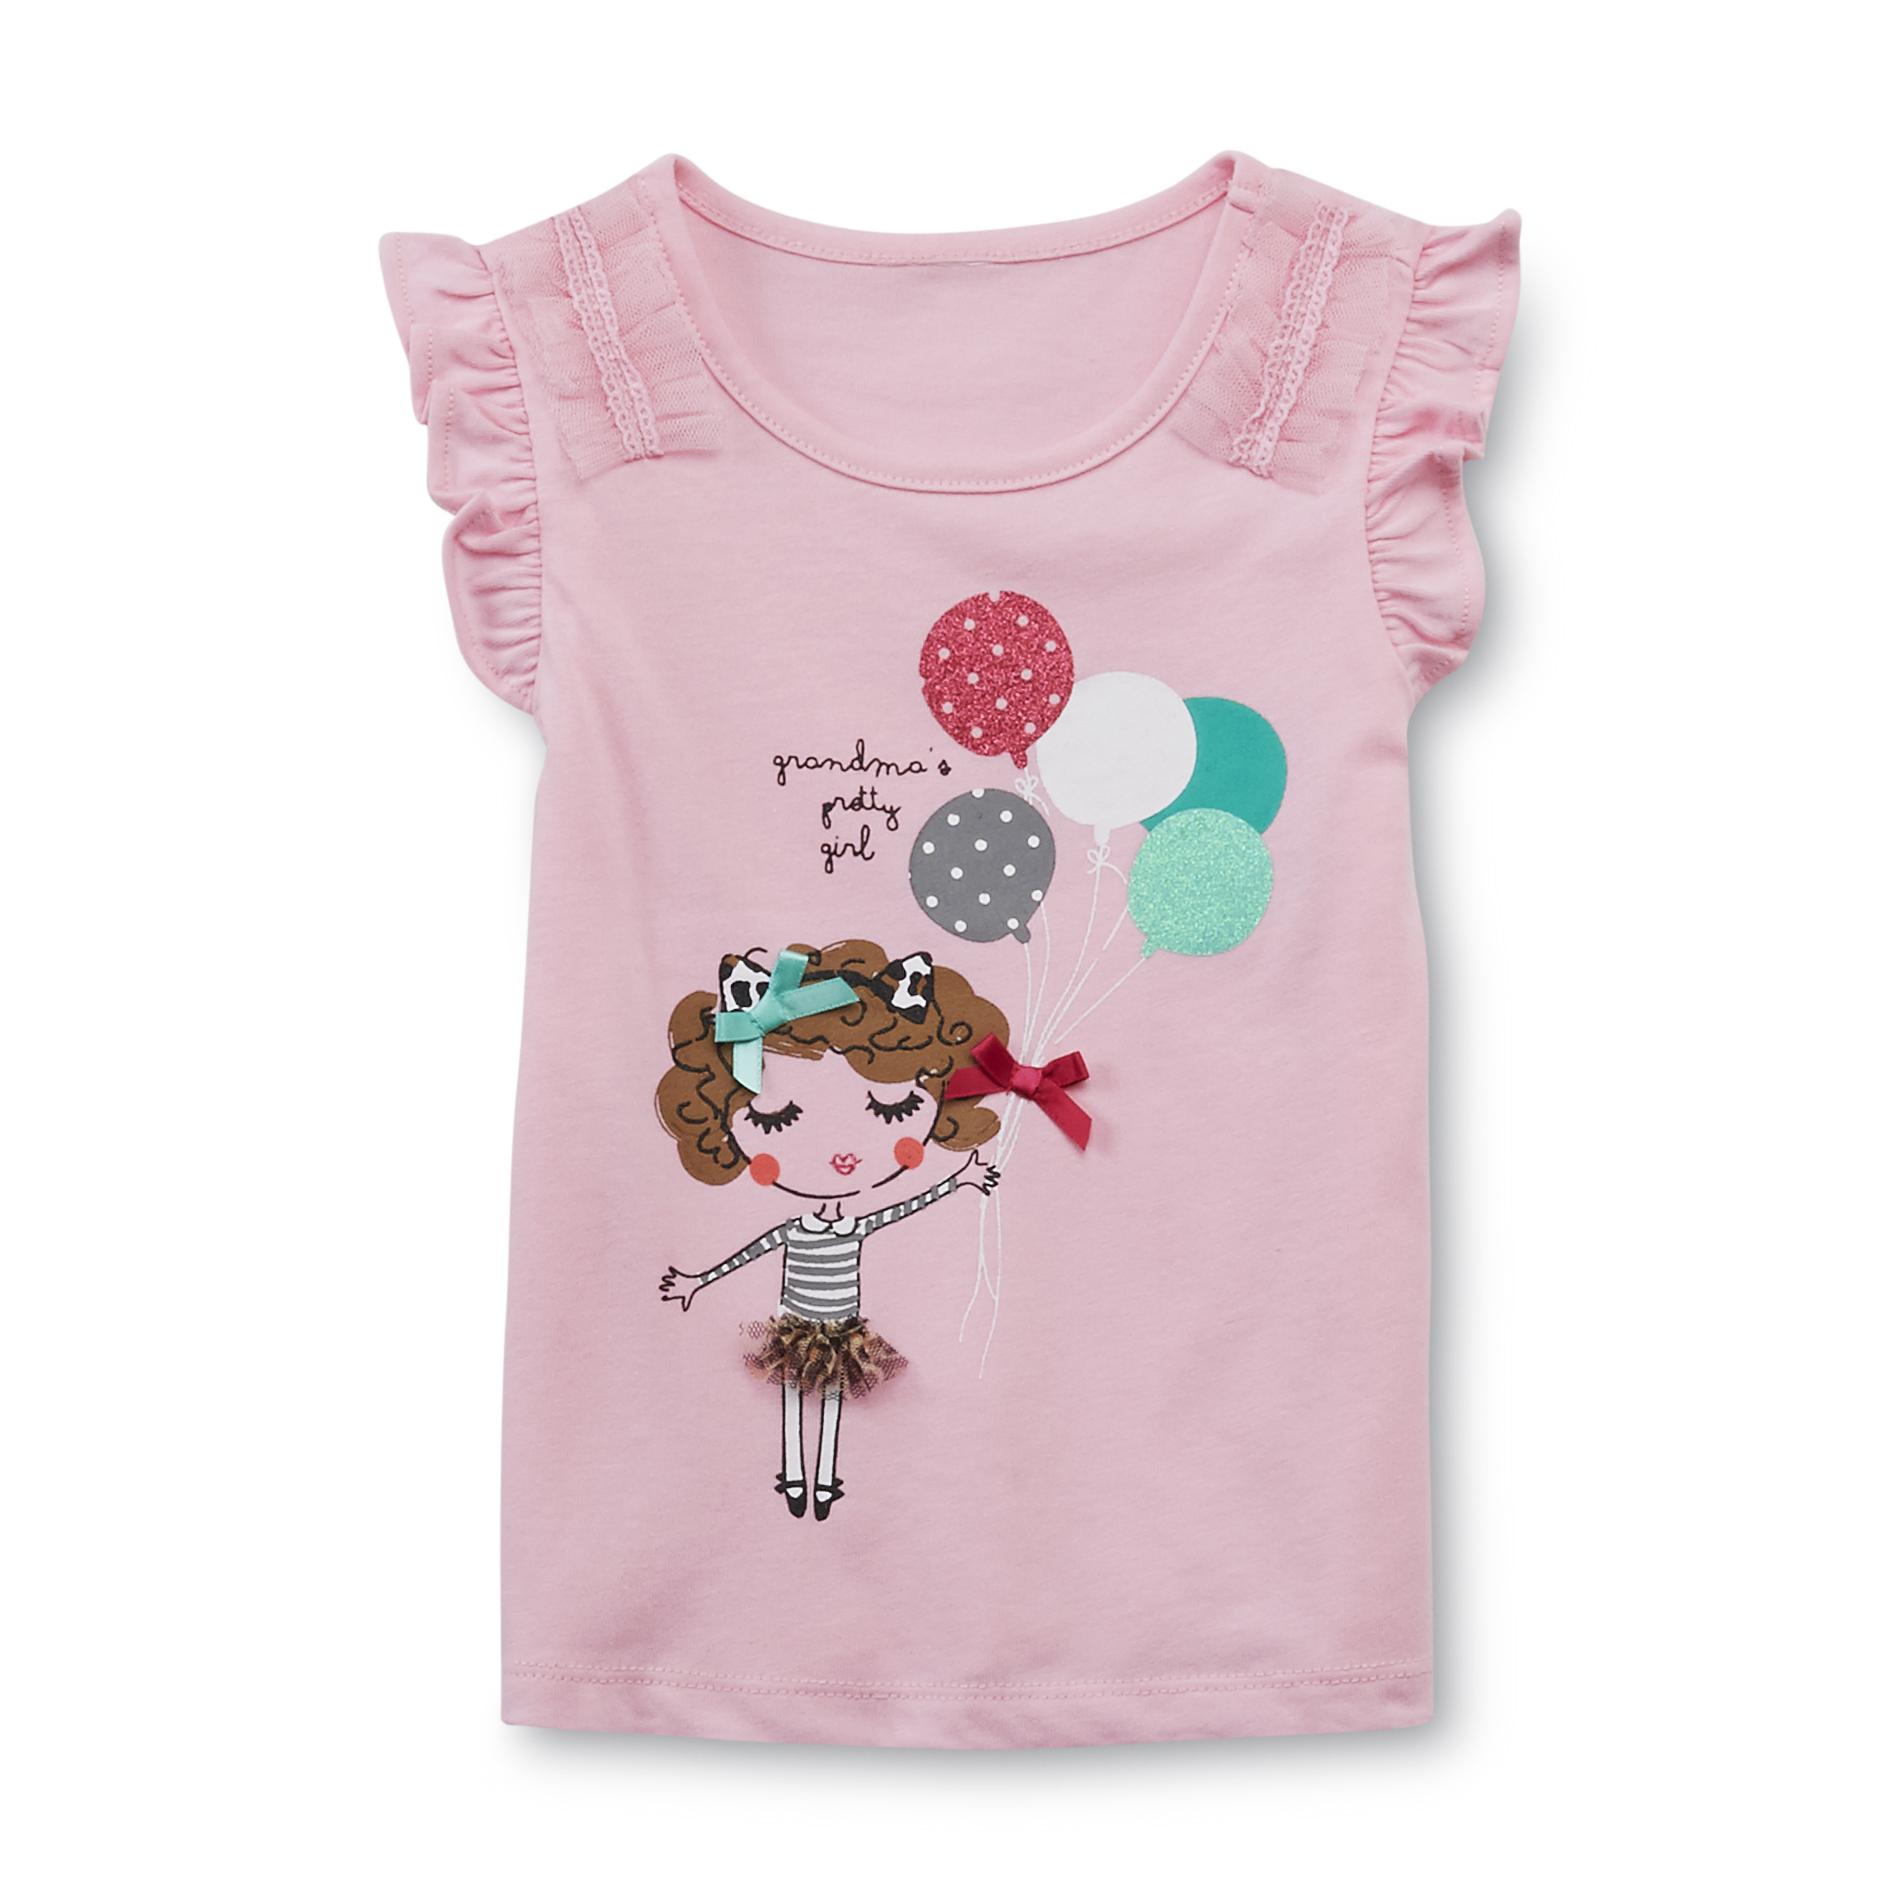 WonderKids Infant & Toddler Girl's Embellished Top - Grandma's Pretty Girl